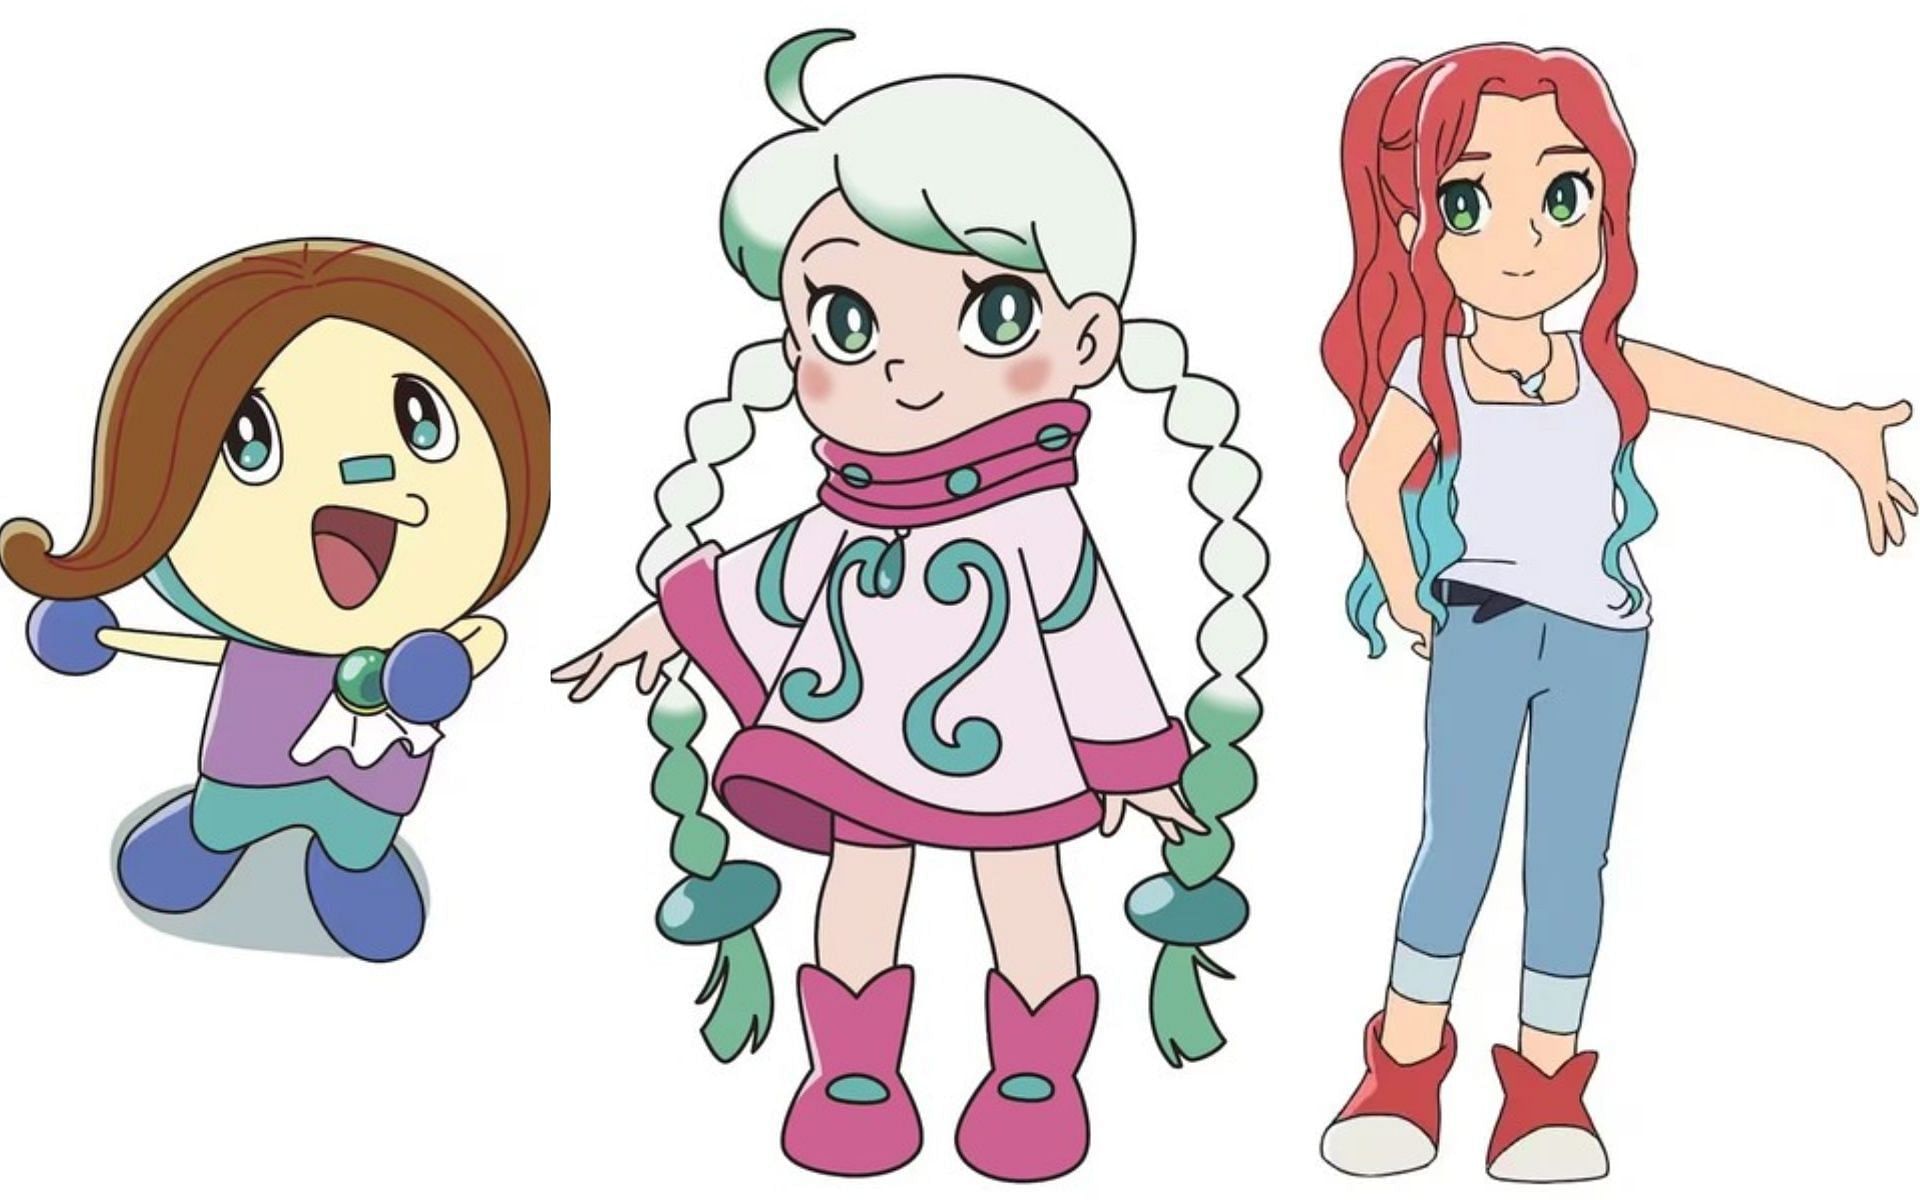 Chapekku, Mikka, and Miina from the upcoming Doraemon film (Image via Shin-Ei Animation)